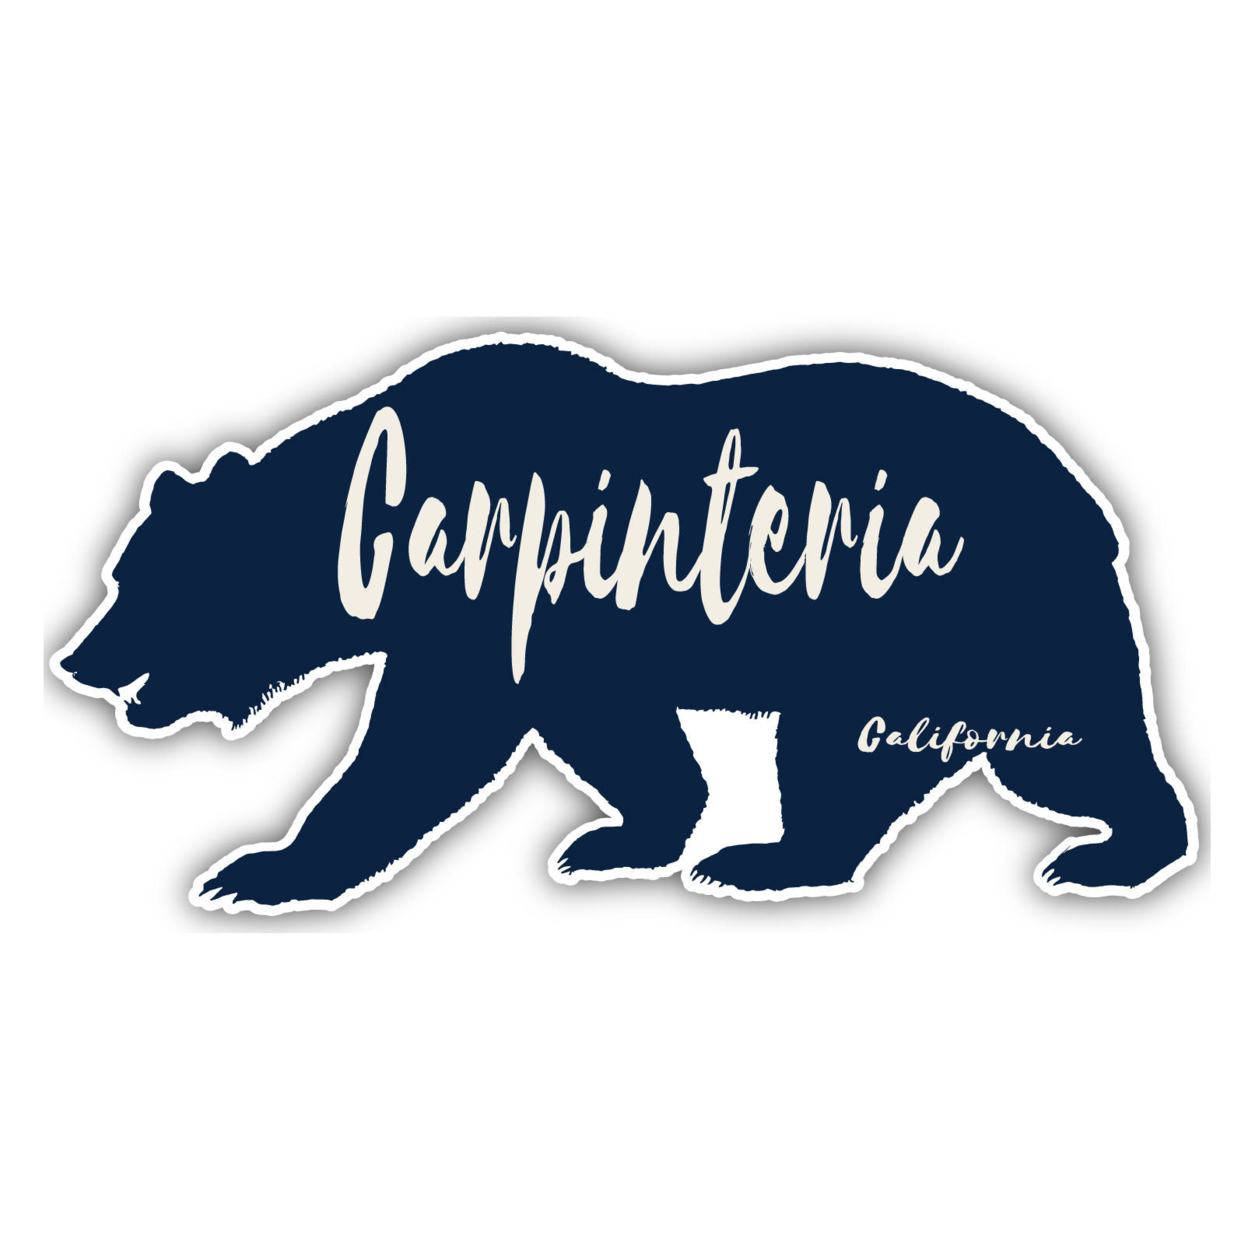 Carpinteria California Souvenir Decorative Stickers (Choose Theme And Size) - 4-Pack, 2-Inch, Tent